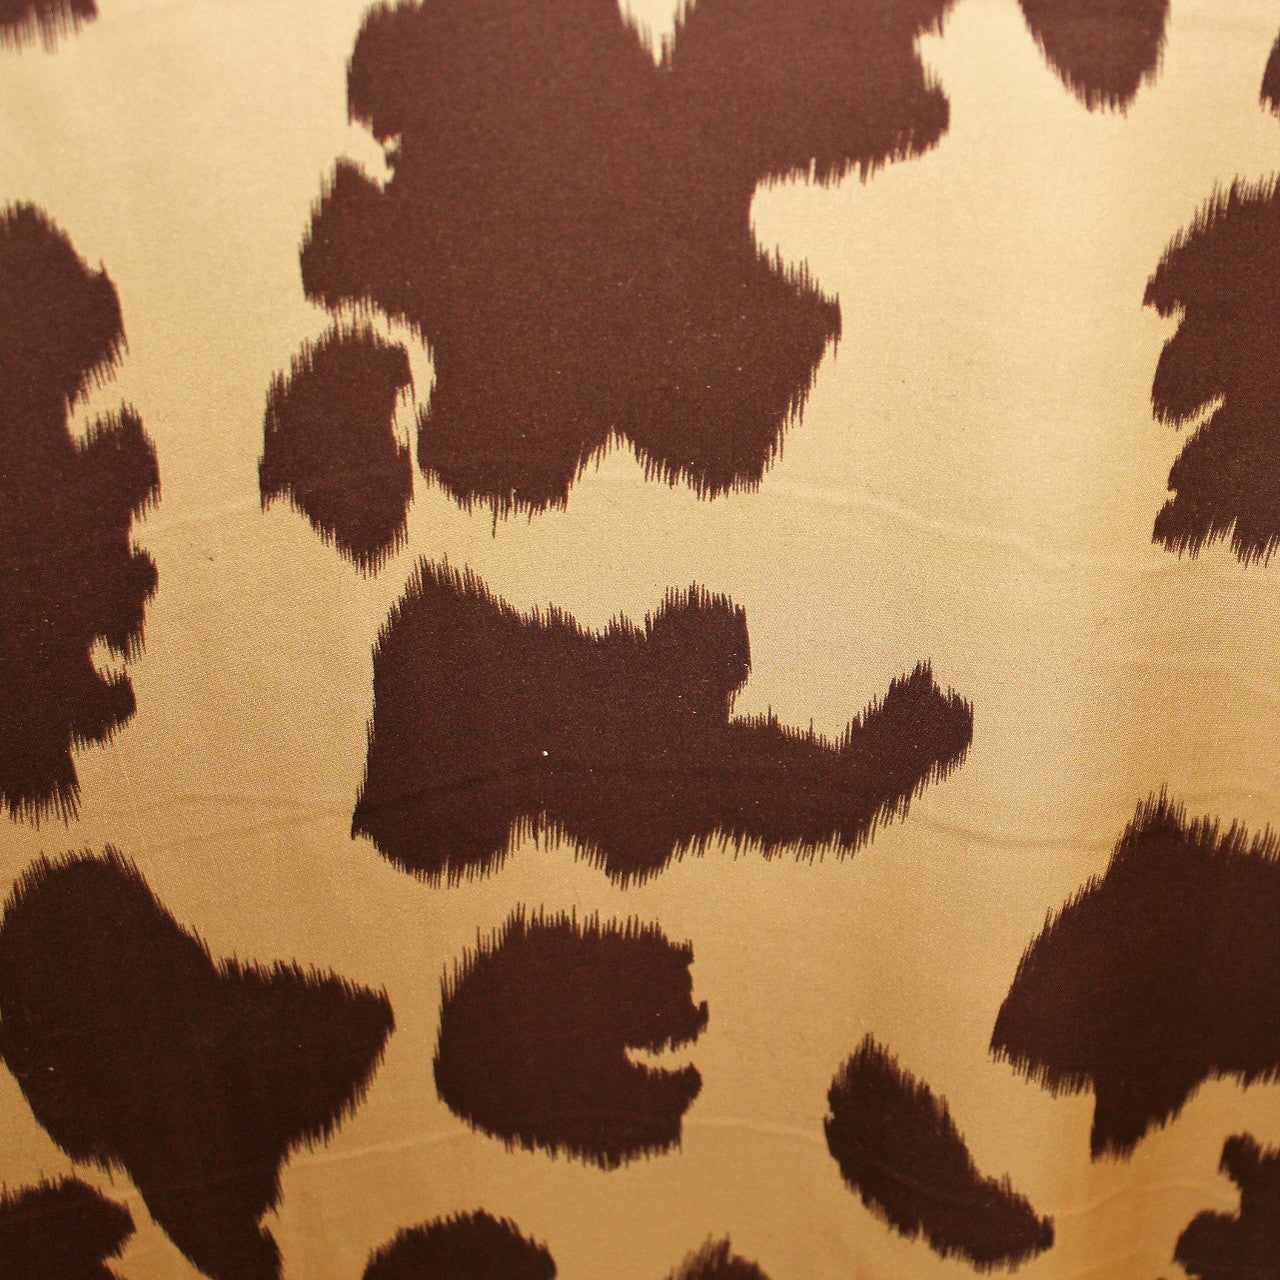 MEDIUM brown cow print fabric - brown Fabric